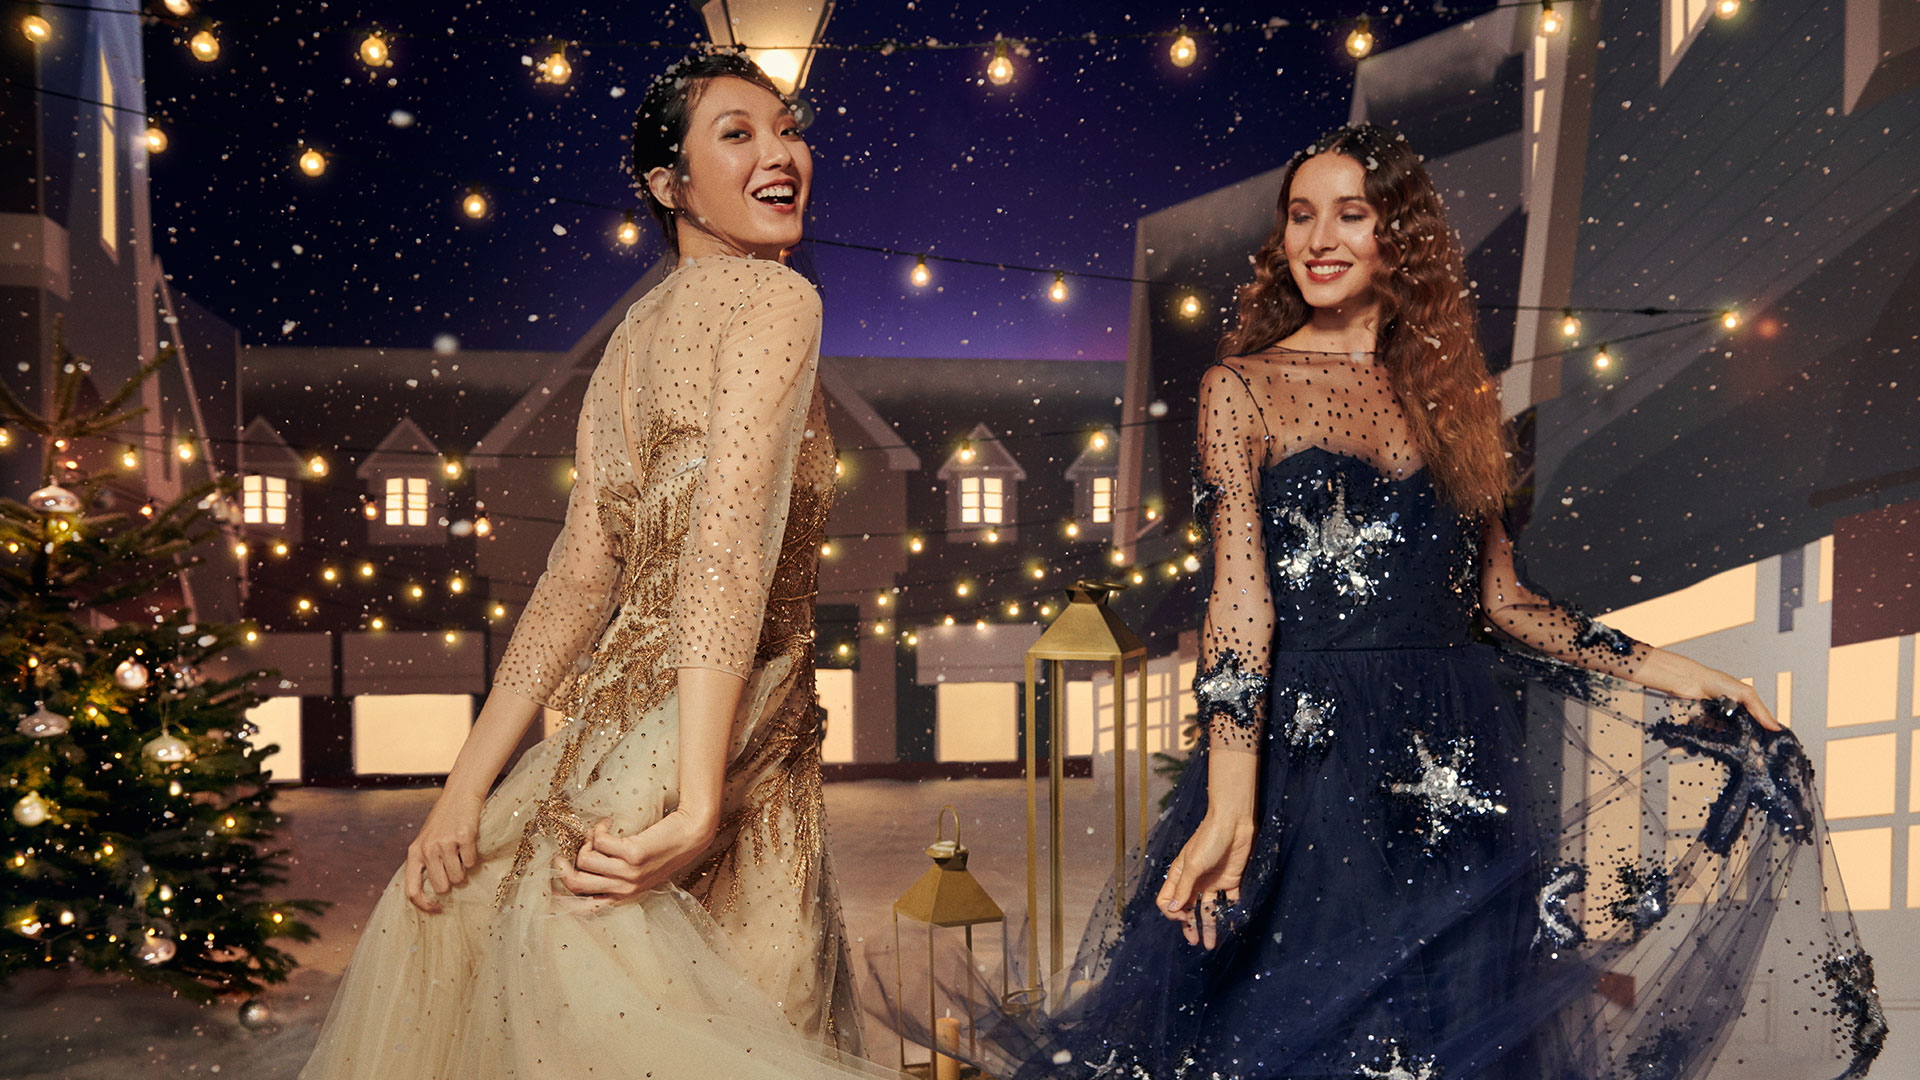 Two women dancing in a winter wonderland wearing beautiful dresses